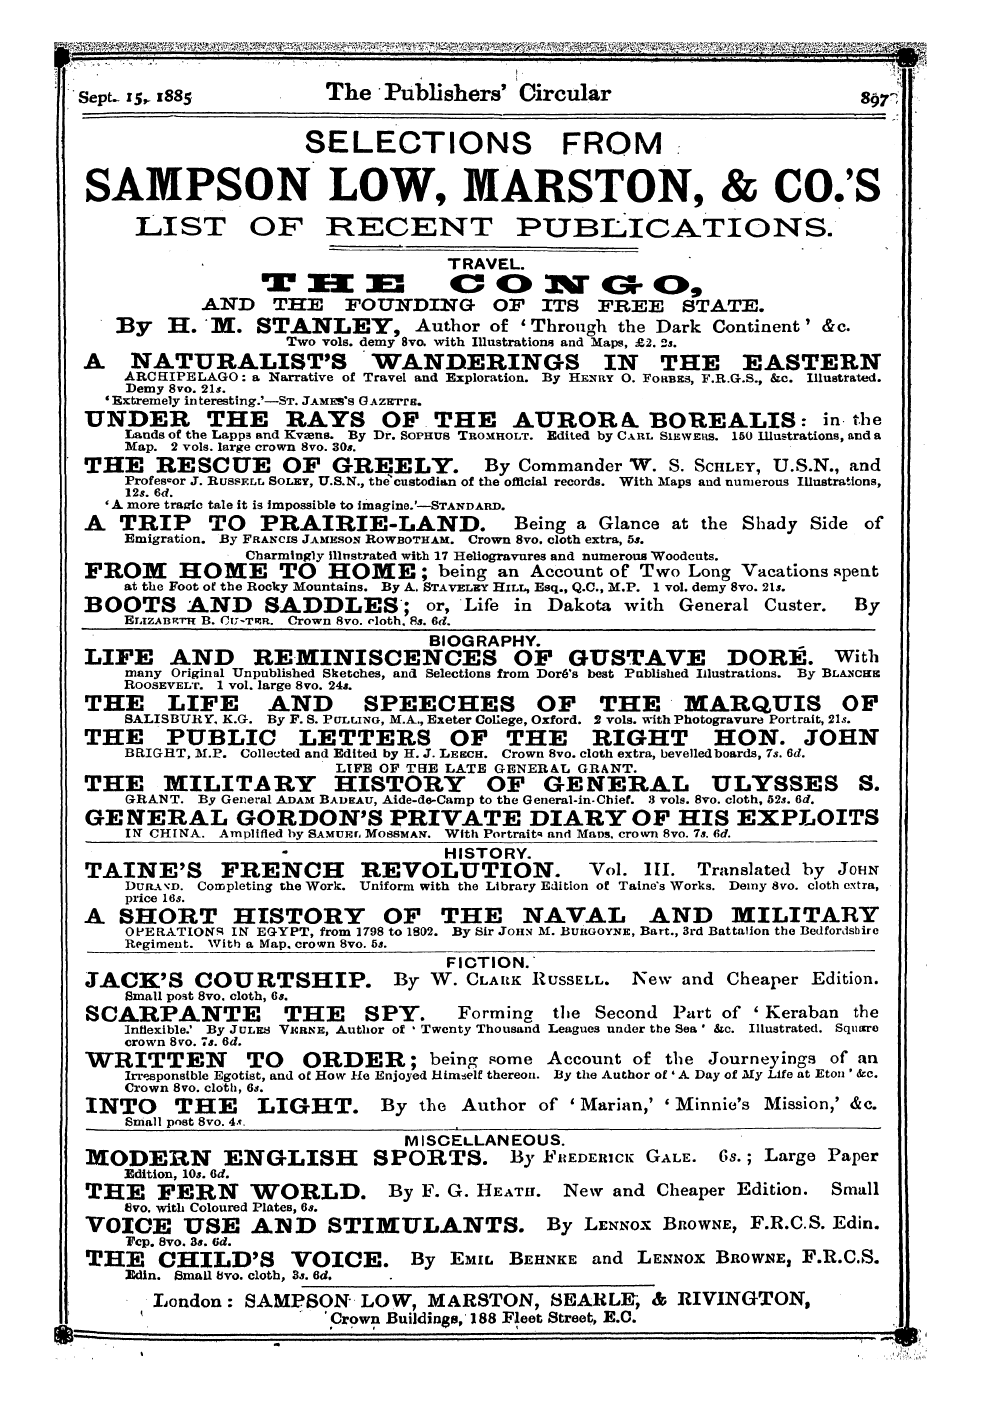 Publishers’ Circular (1880-1890): jS F Y, 1st edition: 25